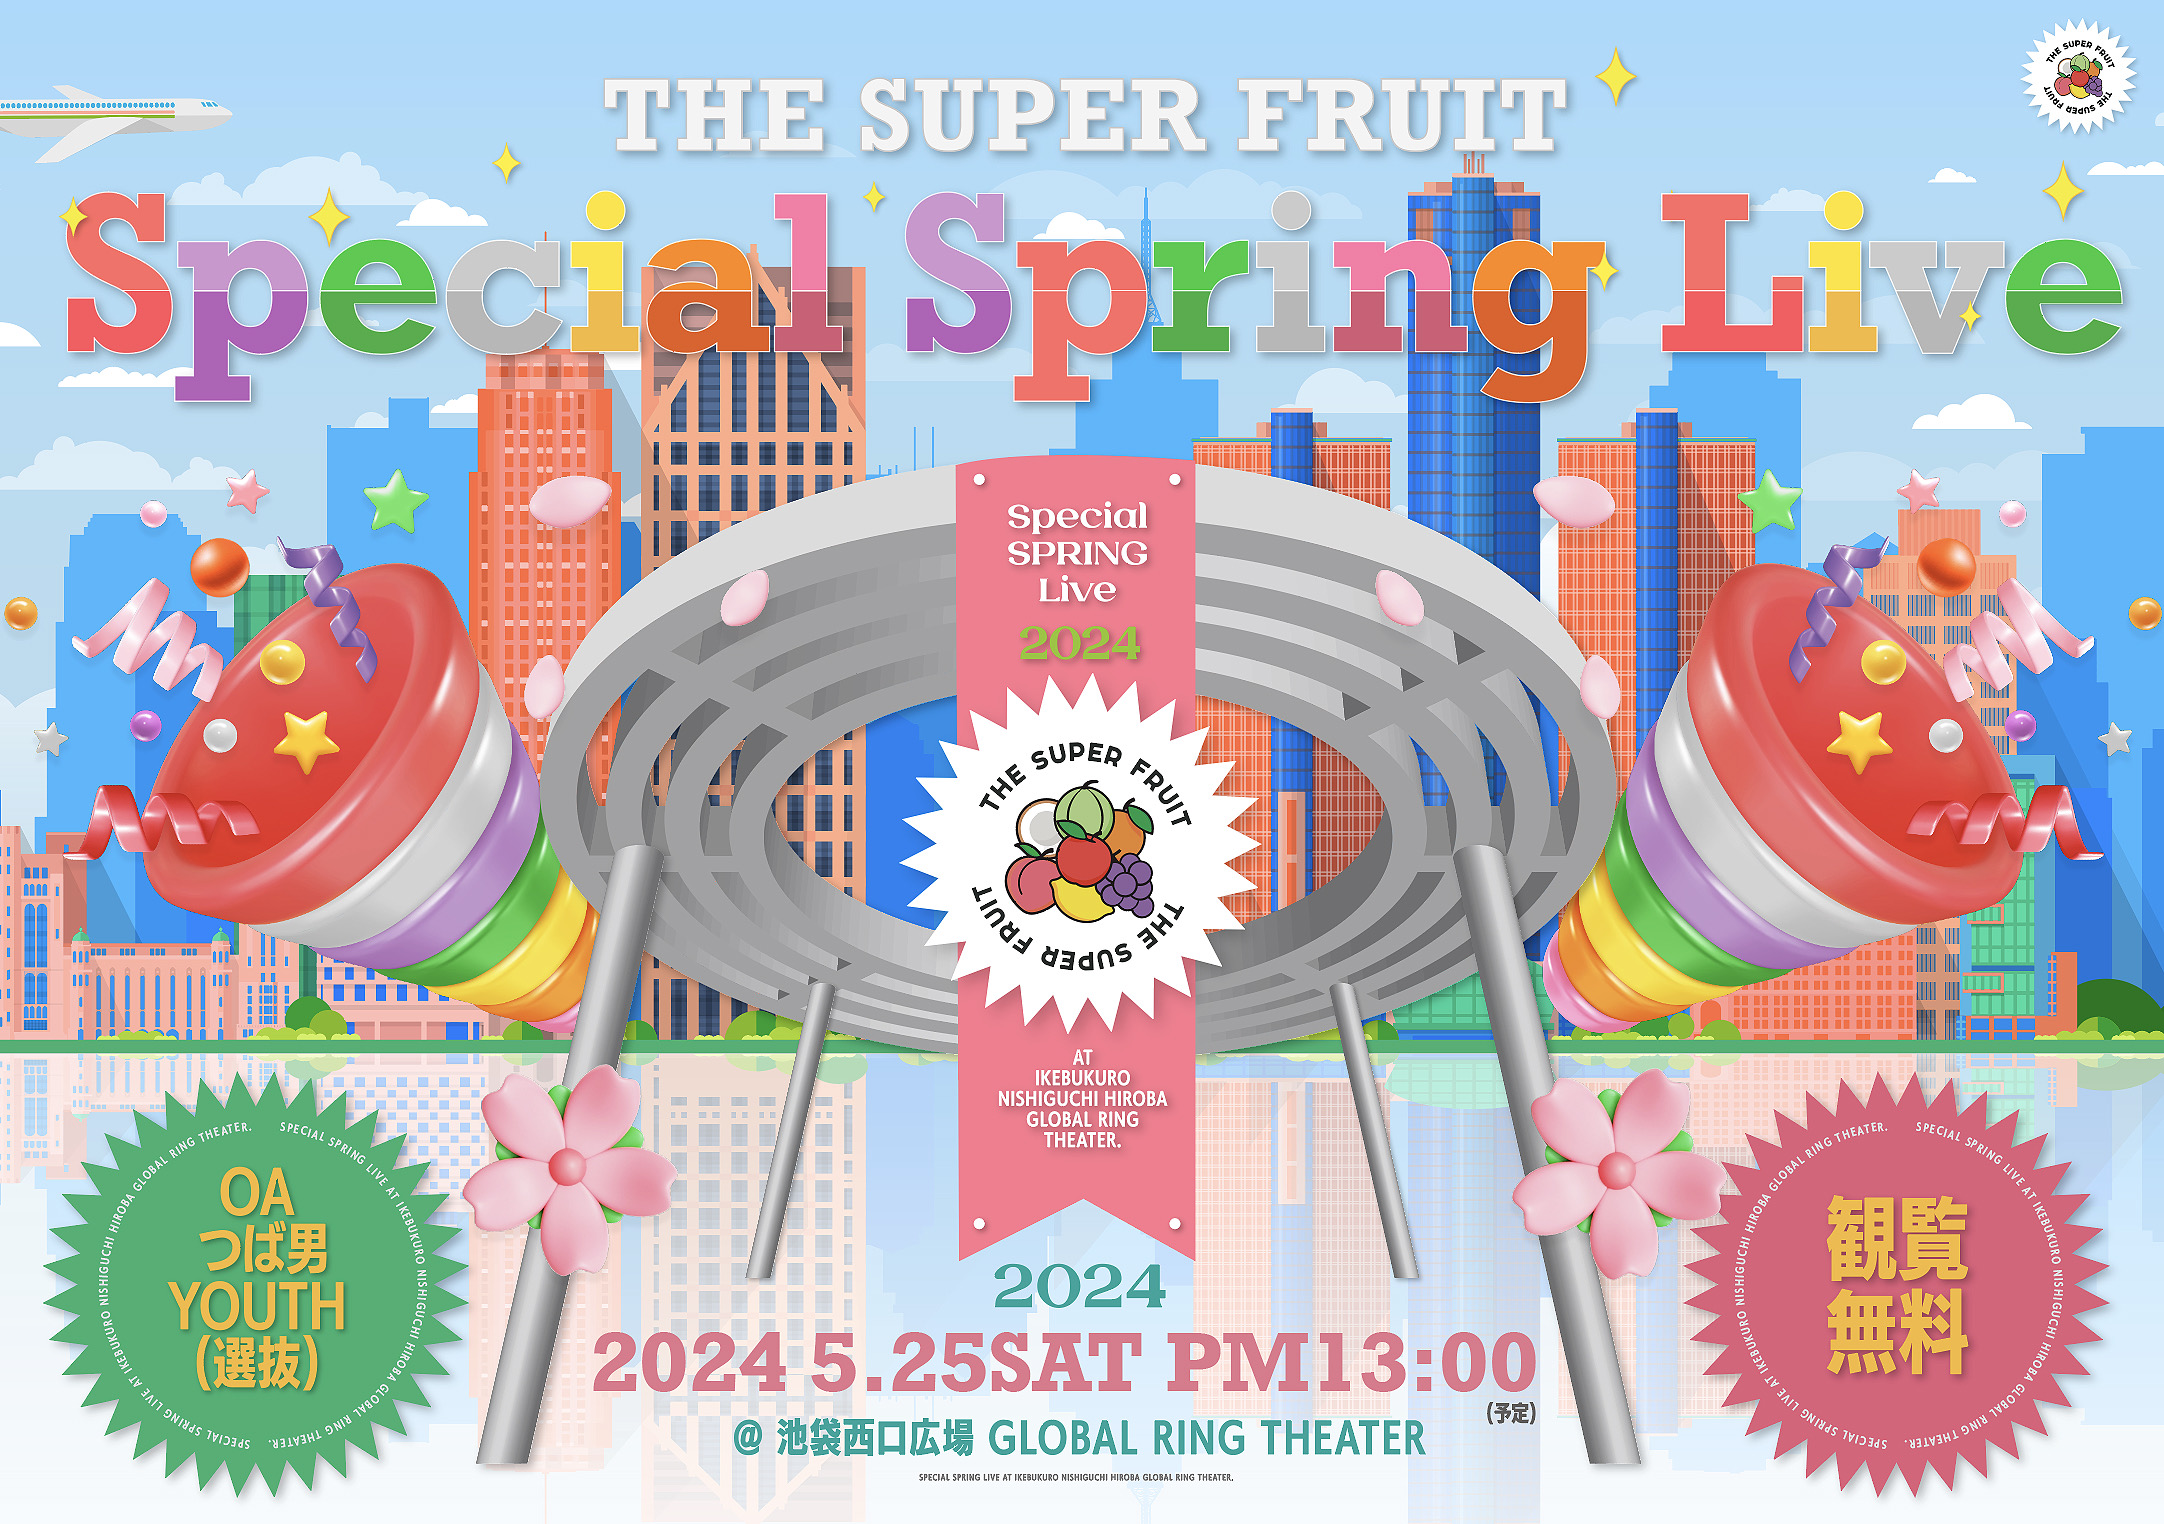 【NEWS】5月25日(土)開催「THE SUPER FRUIT Special Spring Live」会場での「２ショット写メ券」販売についてお知らせ